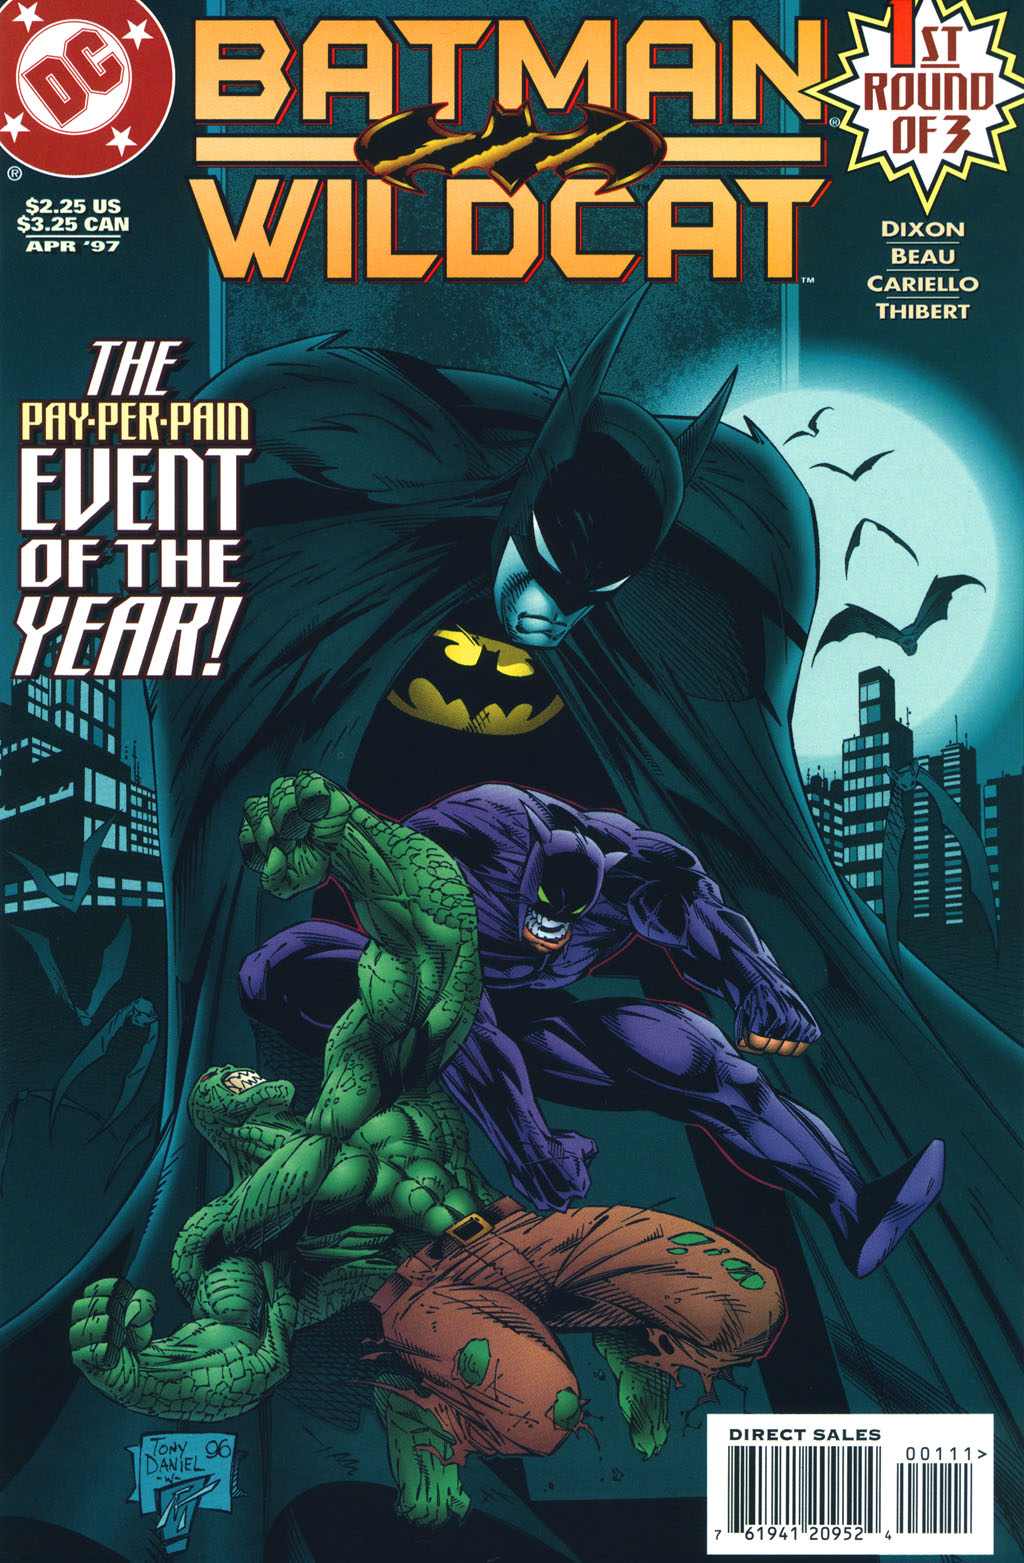 Read Comics Online Free - Batman Wildcat (1997) Comic Book Issue #001 -  Page 1